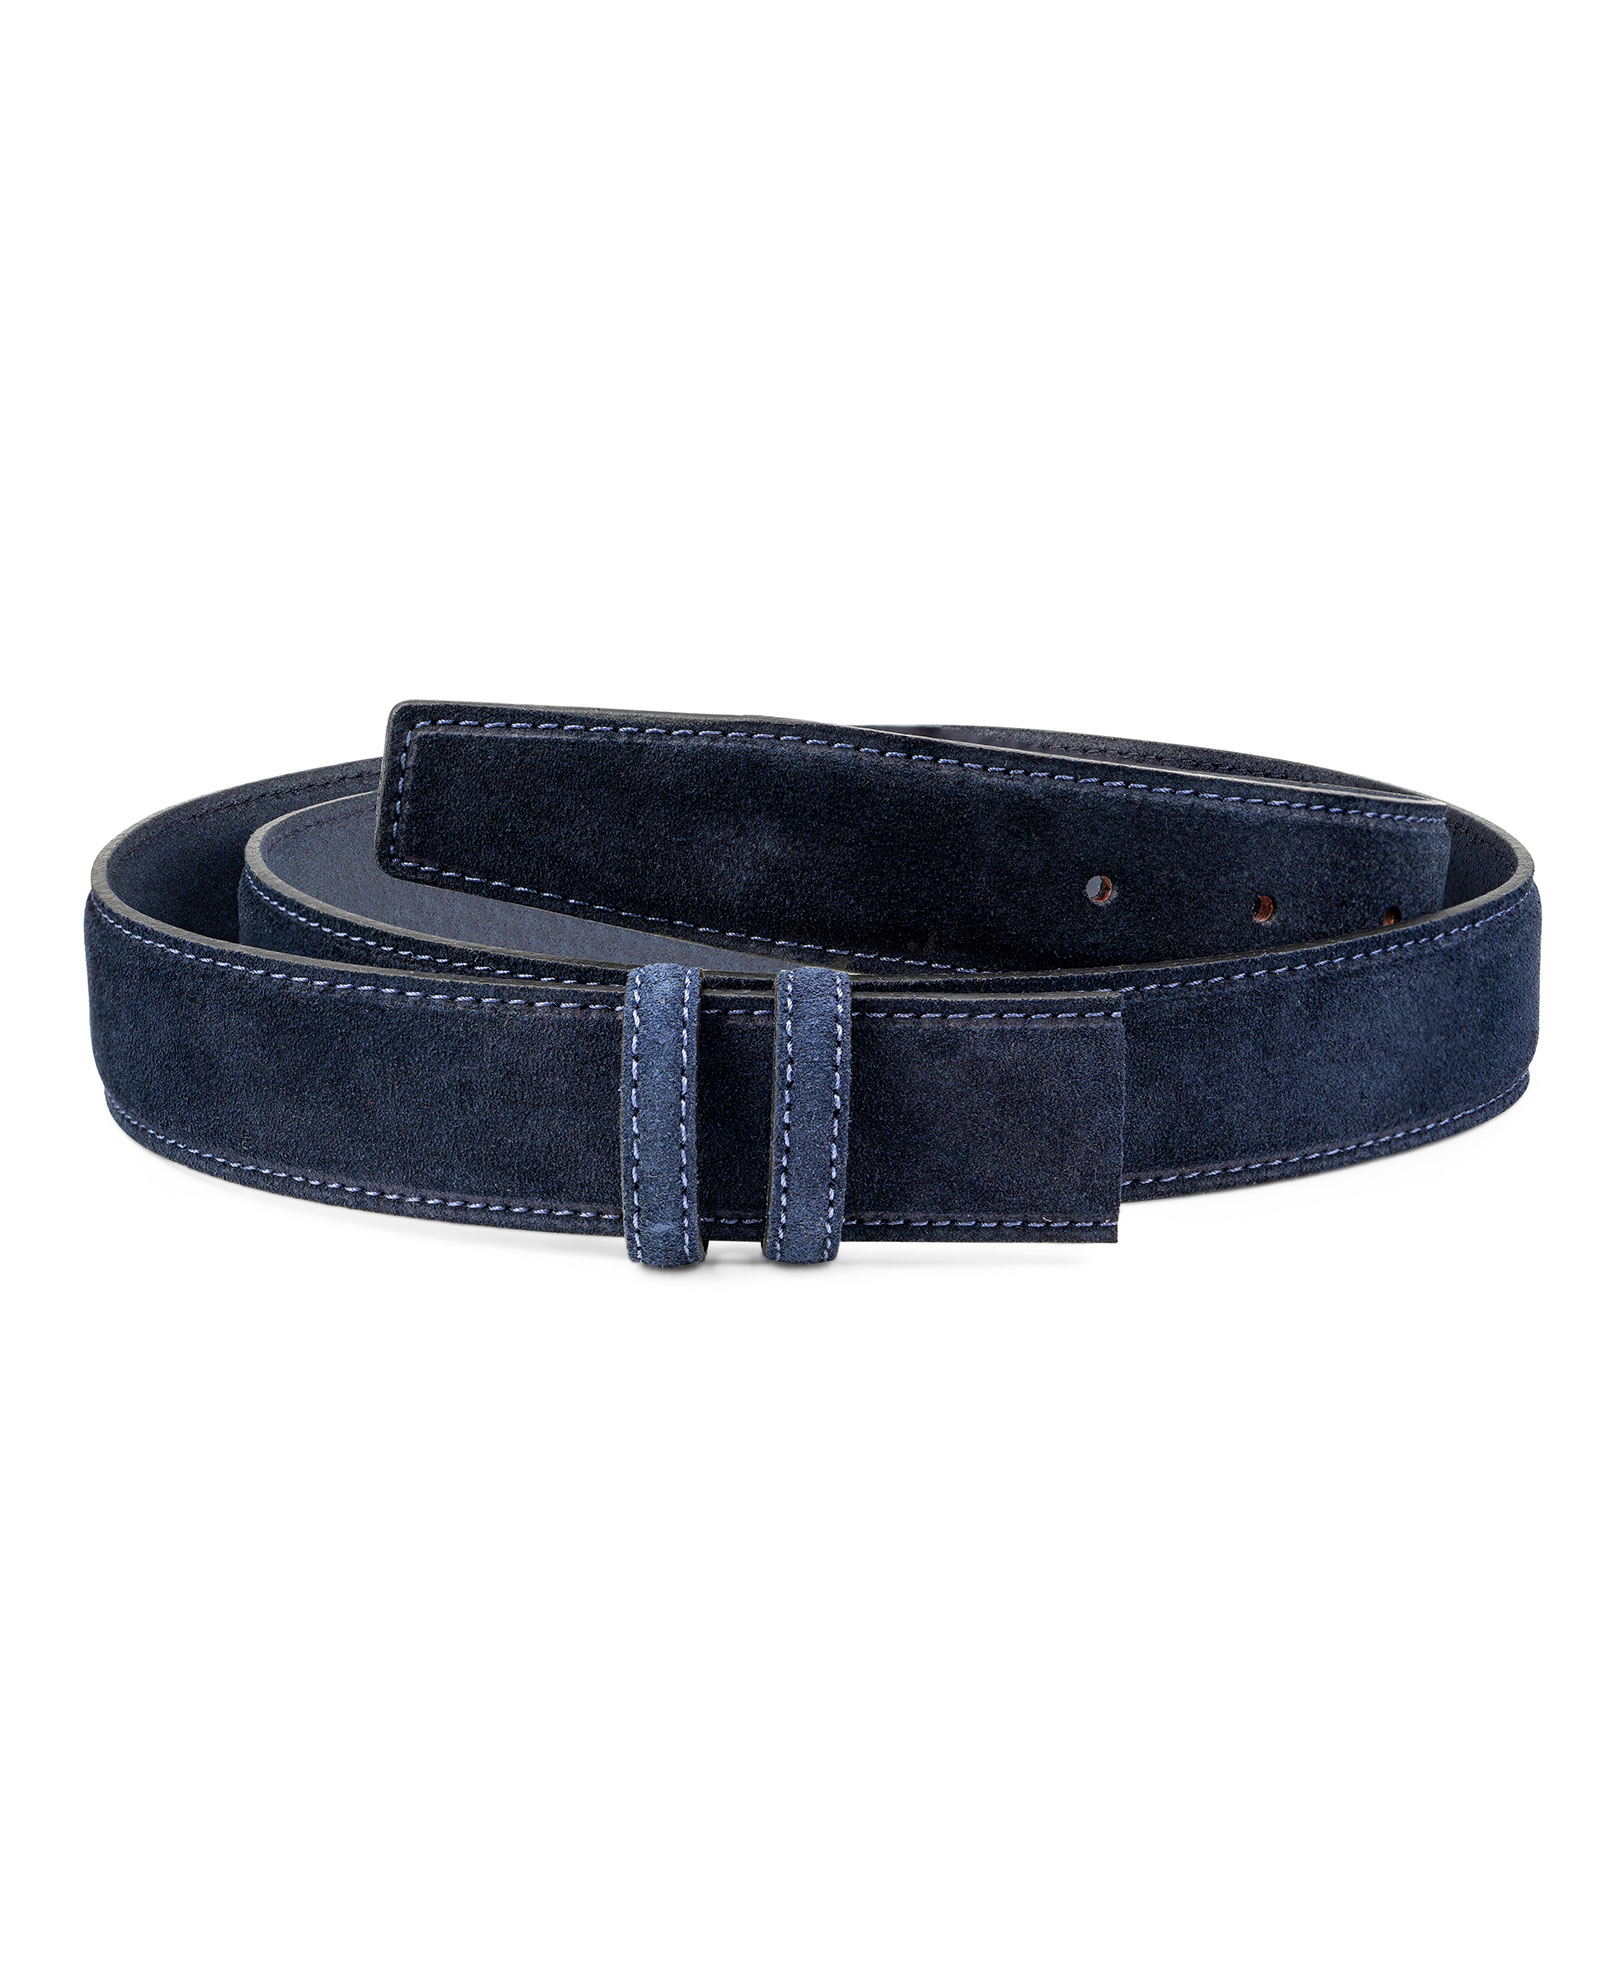 Buy Dark Blue Suede Belt Strap | 35 mm Wide | Free Shipping!